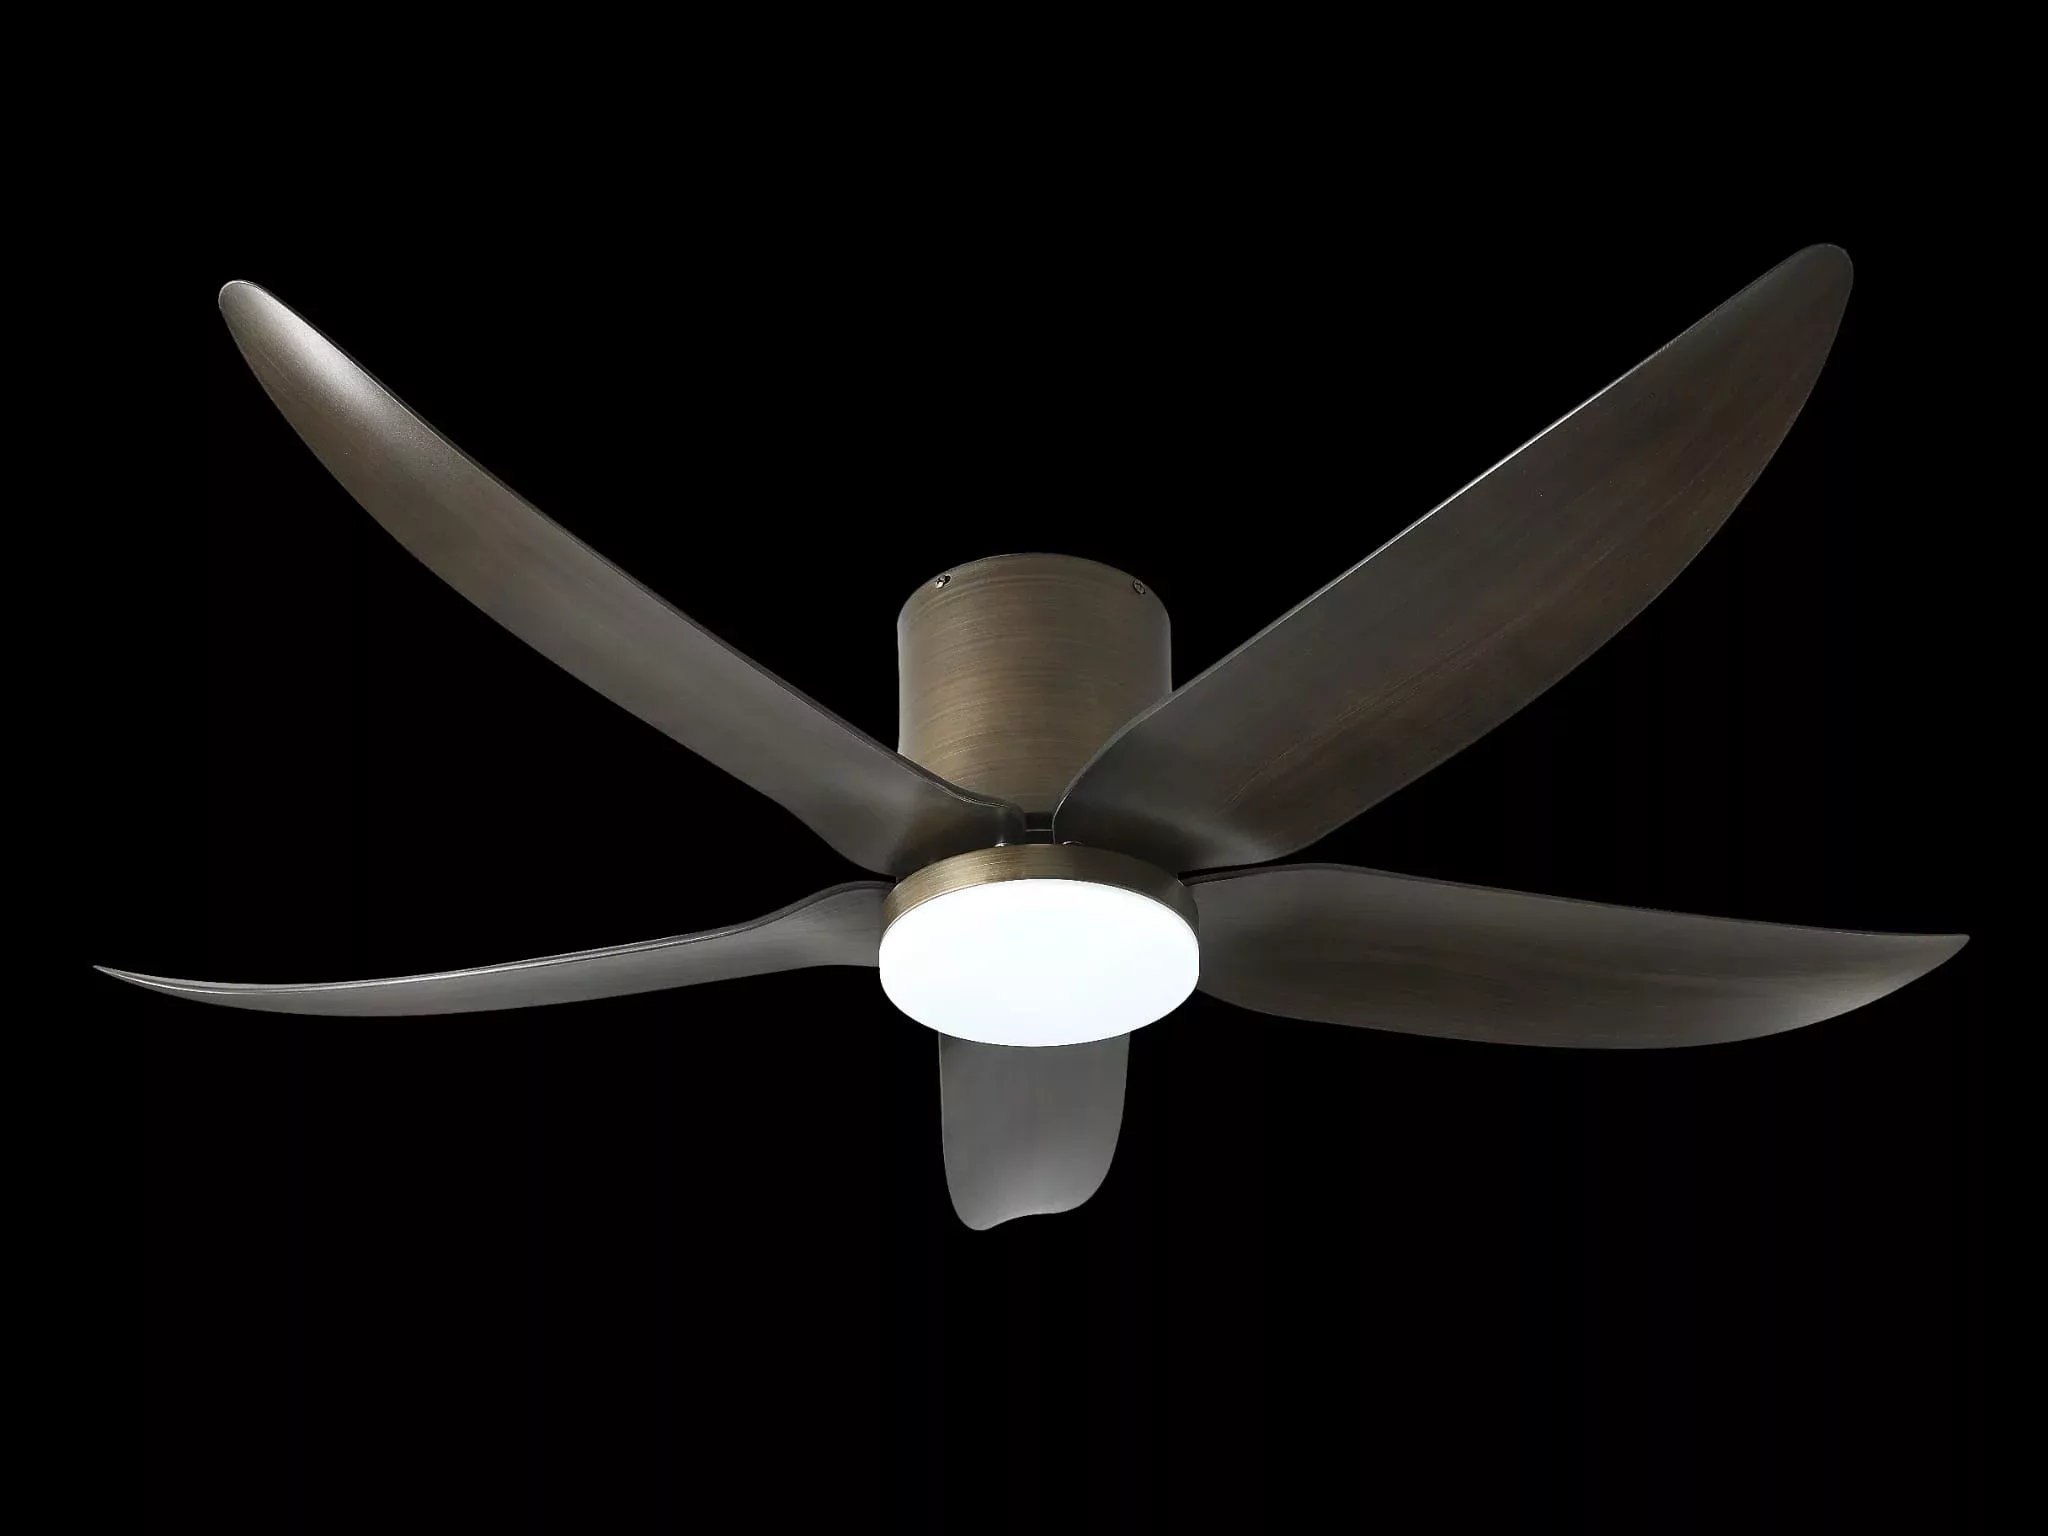 Black 5-blades ceiling fan with light - Bestar vito